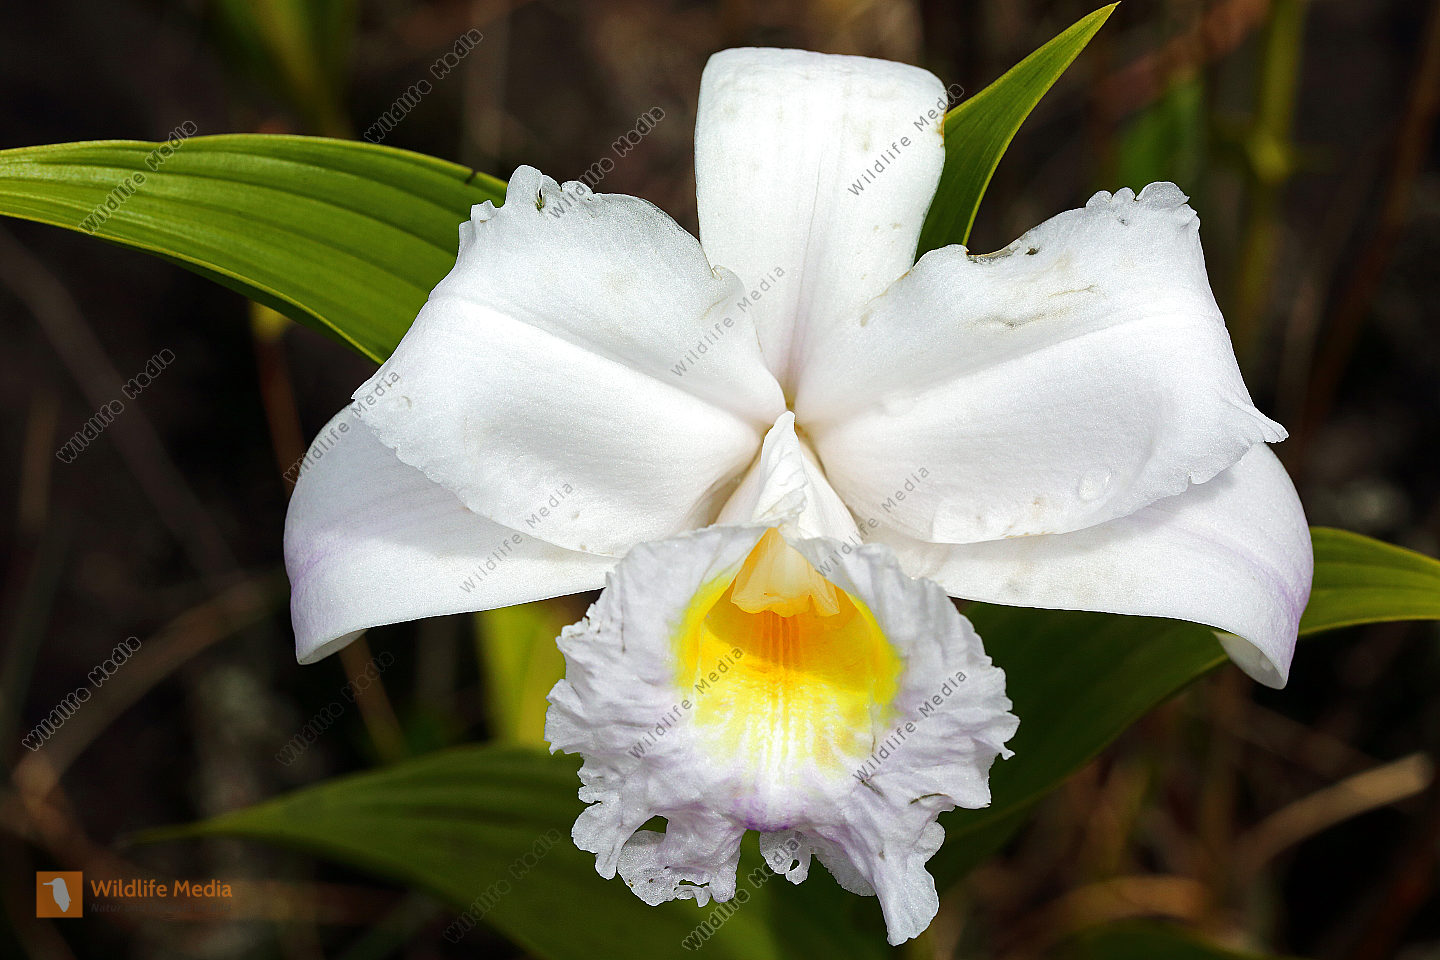 Sobralia-Orchidee